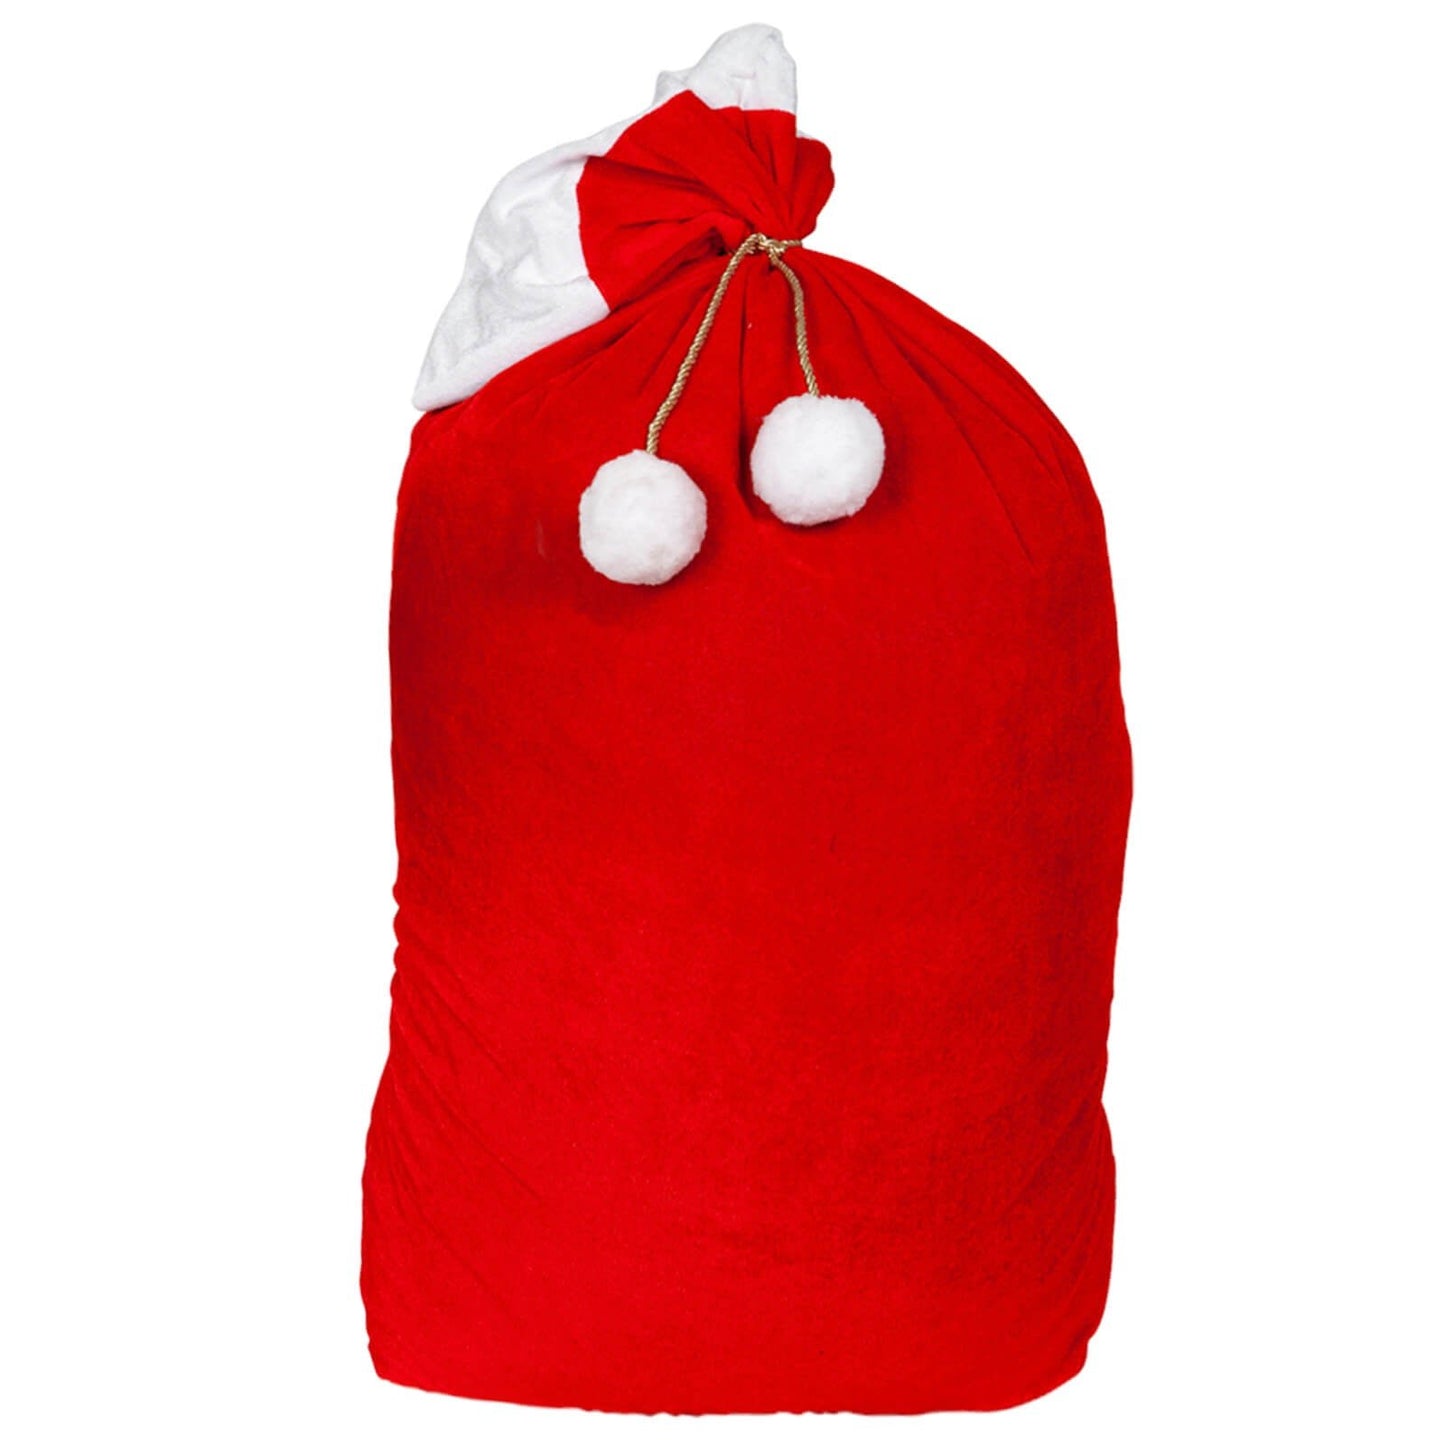 Mr Crimbo Santa Sack Deluxe Red Velvet Bag White Pom Poms - MrCrimbo.co.uk -WKDXM-4675 - Extra Large -santa gift